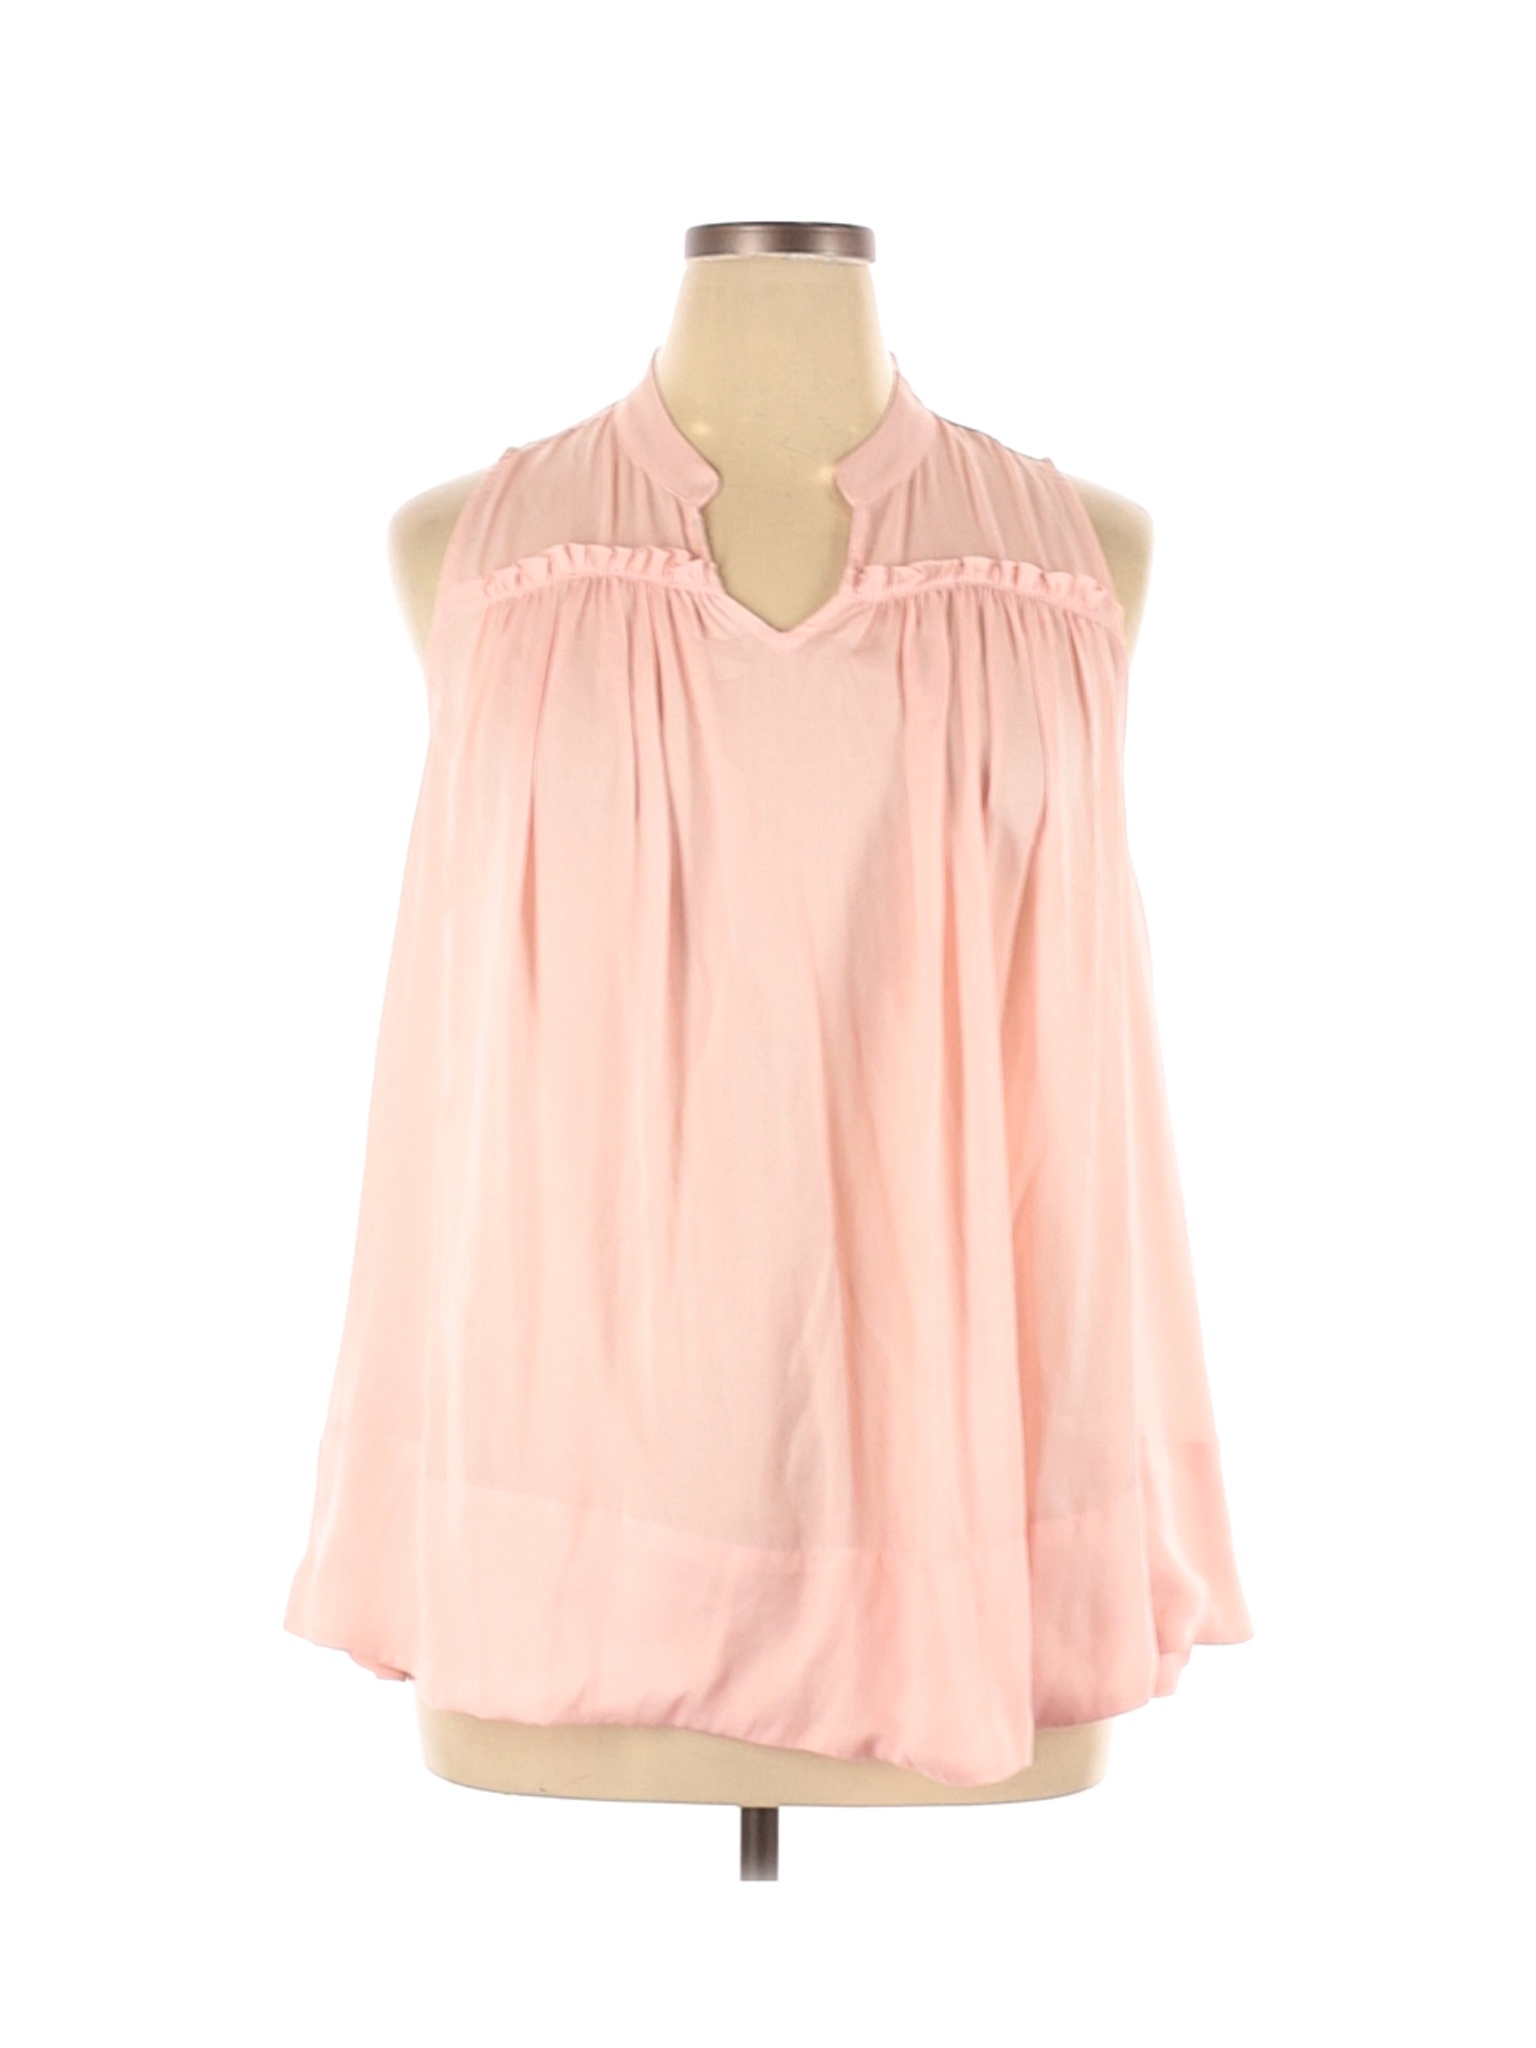 Lane Bryant Women Pink Sleeveless Blouse 16 Plus | eBay